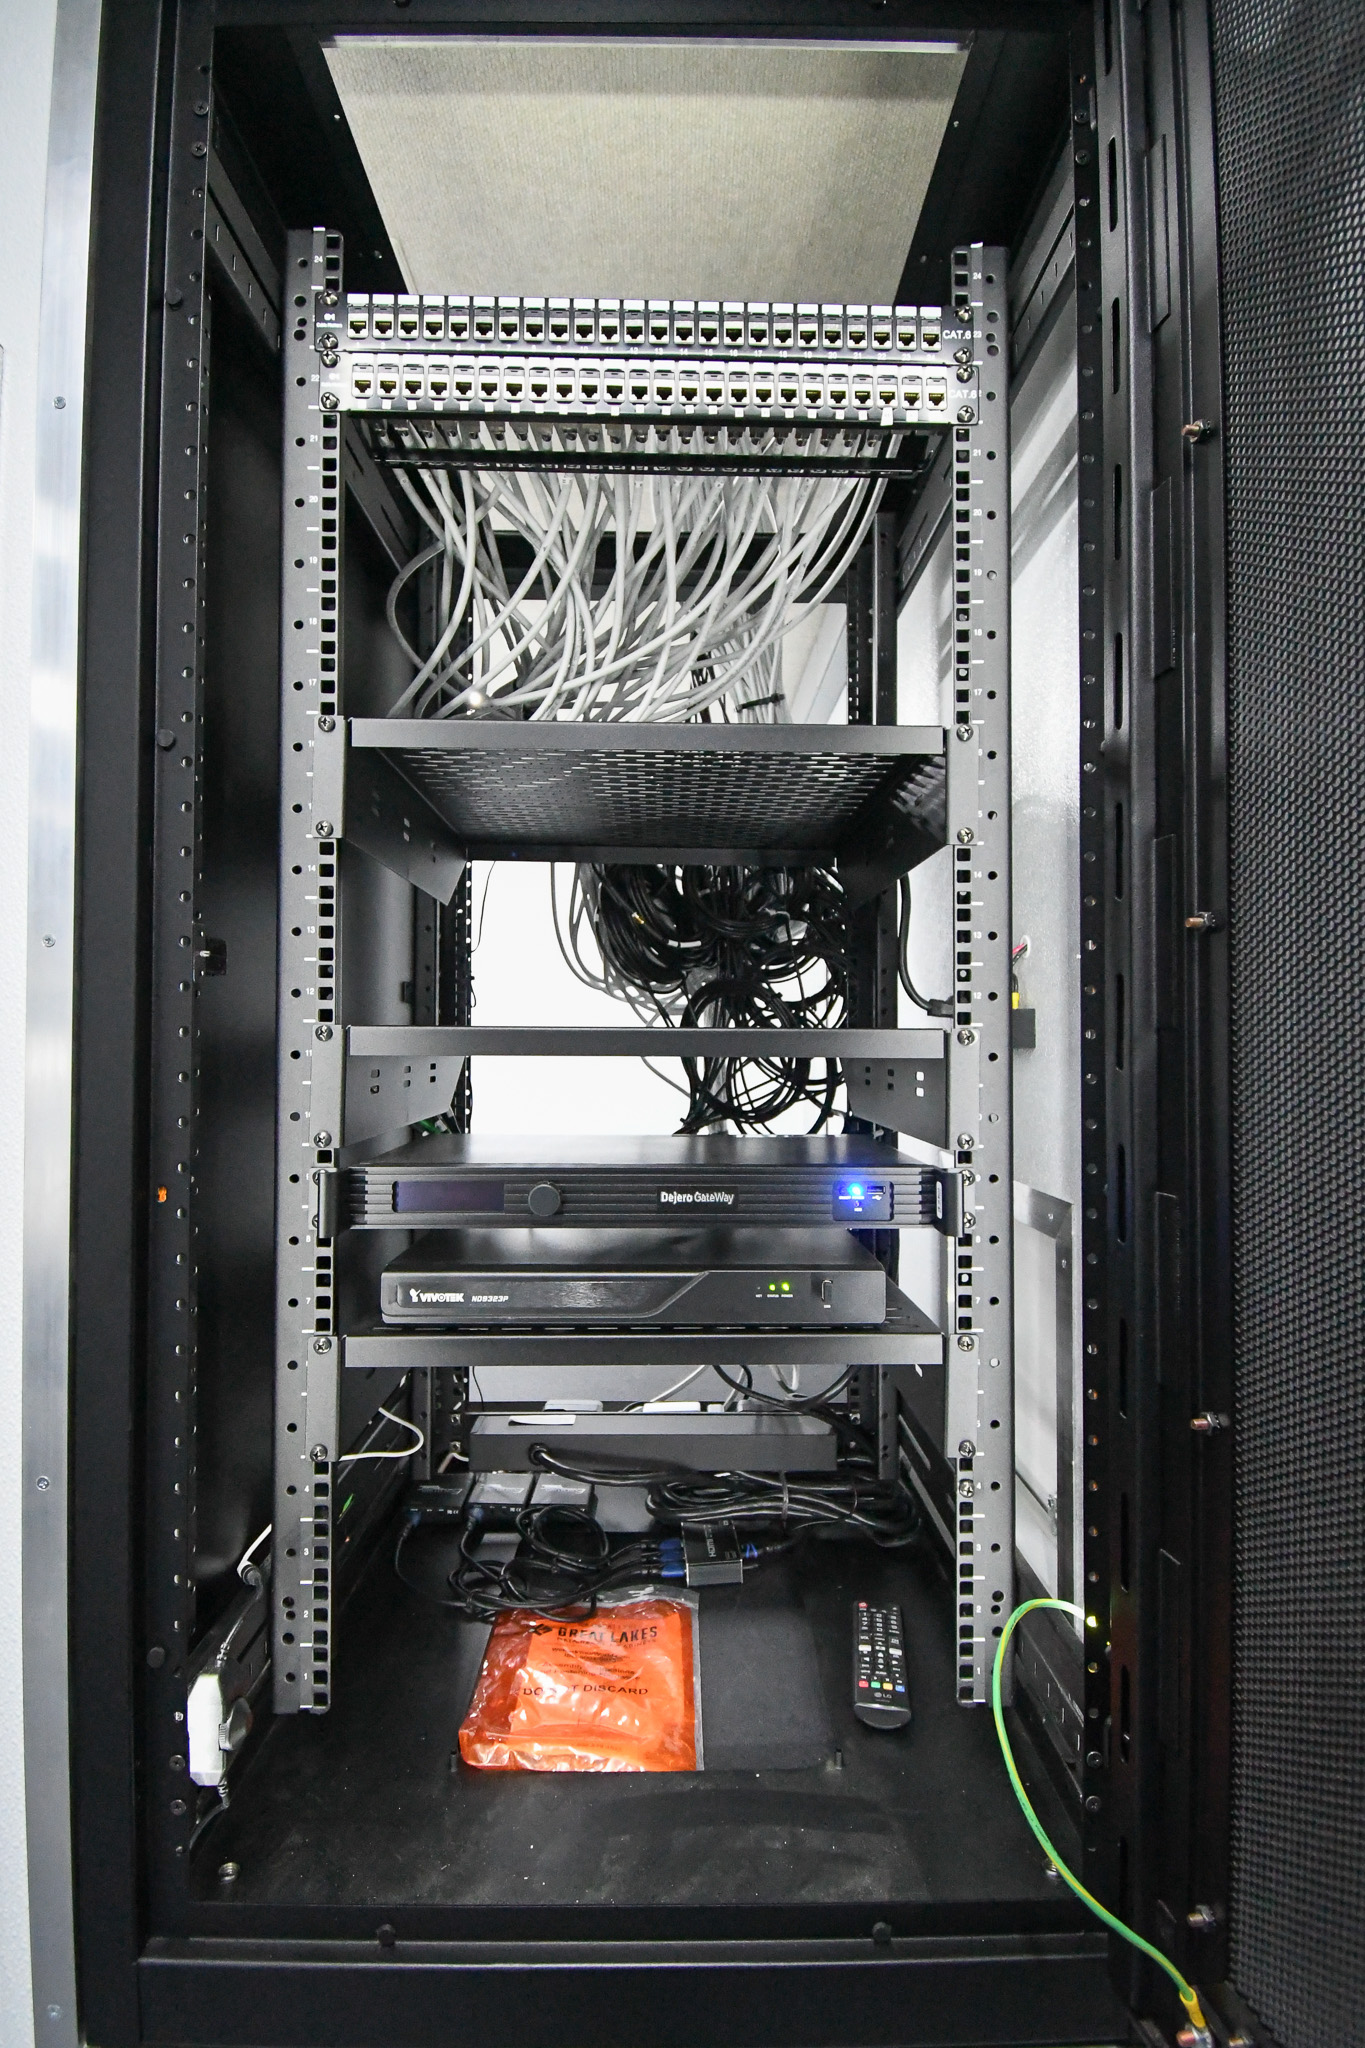 The electronics rack inside the unit for Hillsborough, NC.